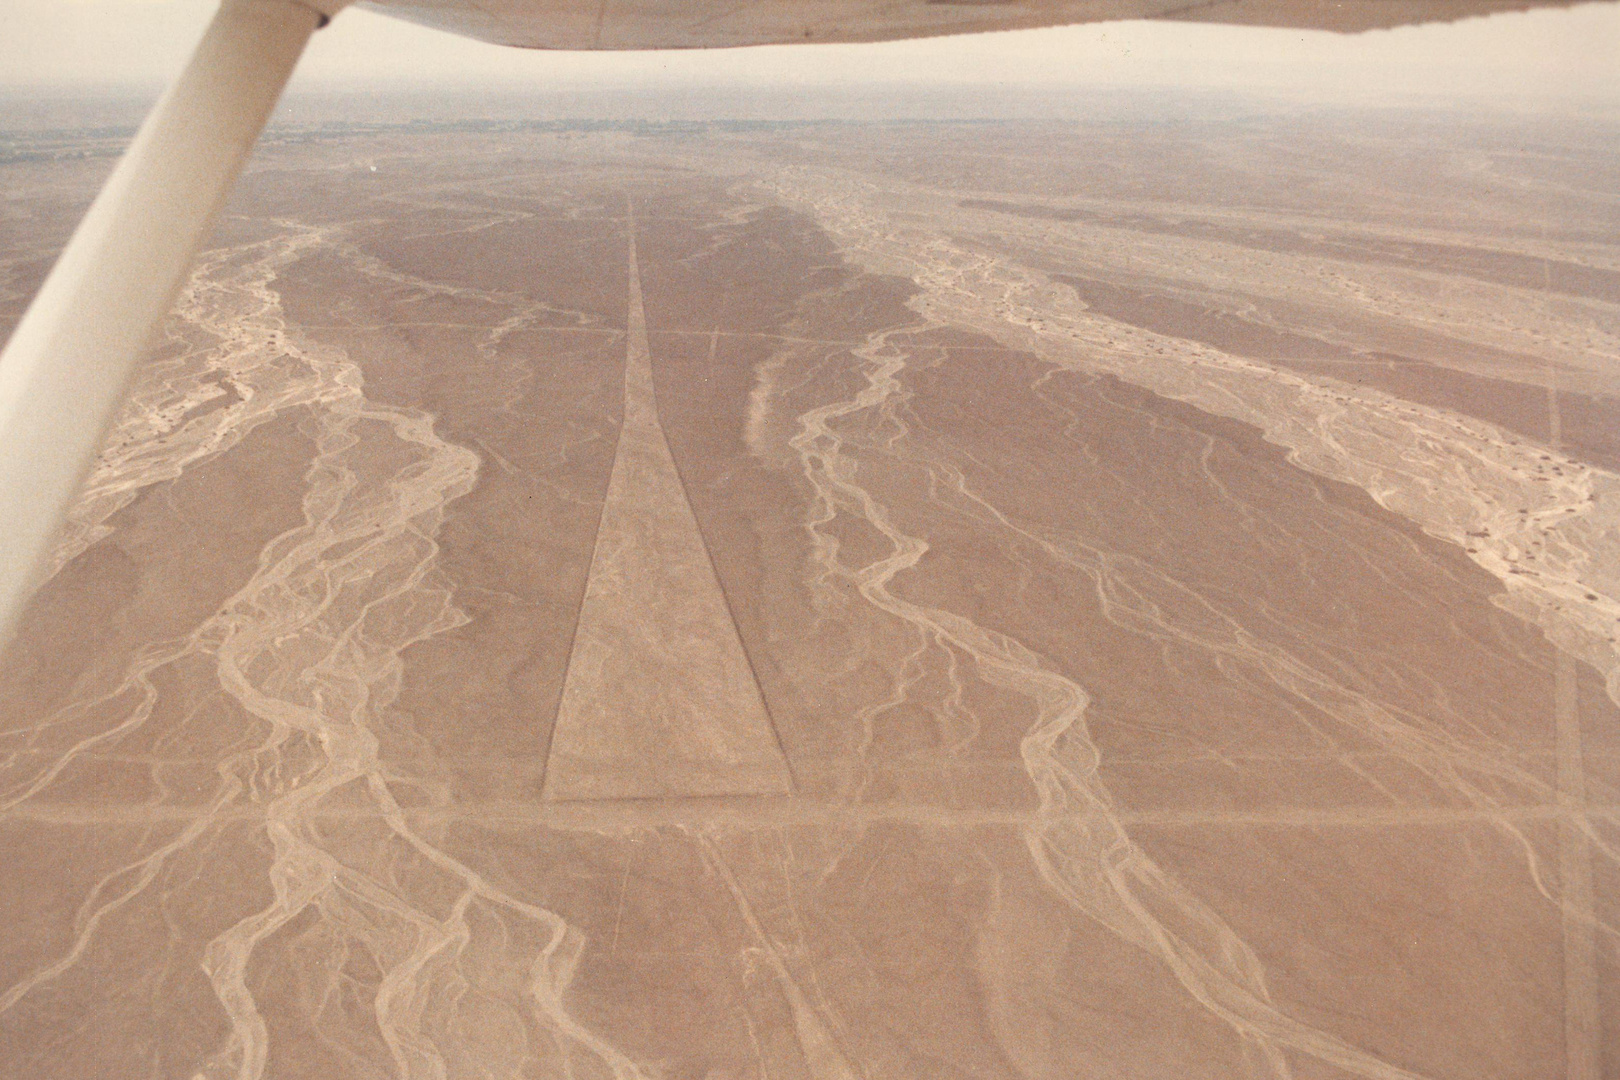 Flug über Nazca / Peru